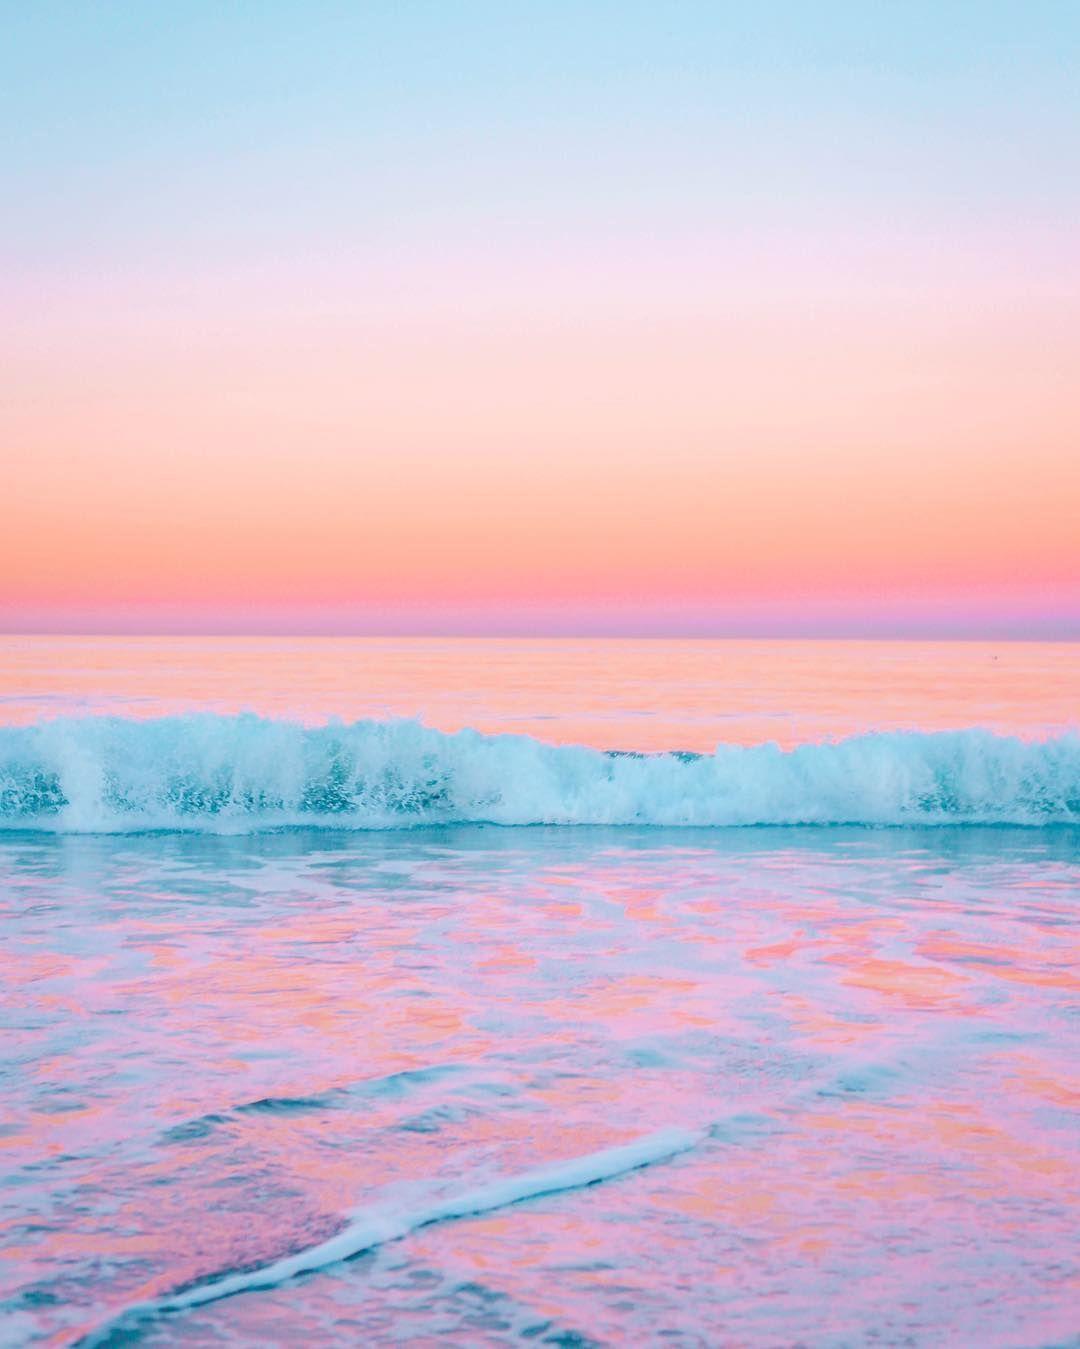 Pastel Ocean Wallpapers - Top Free Pastel Ocean Backgrounds ...